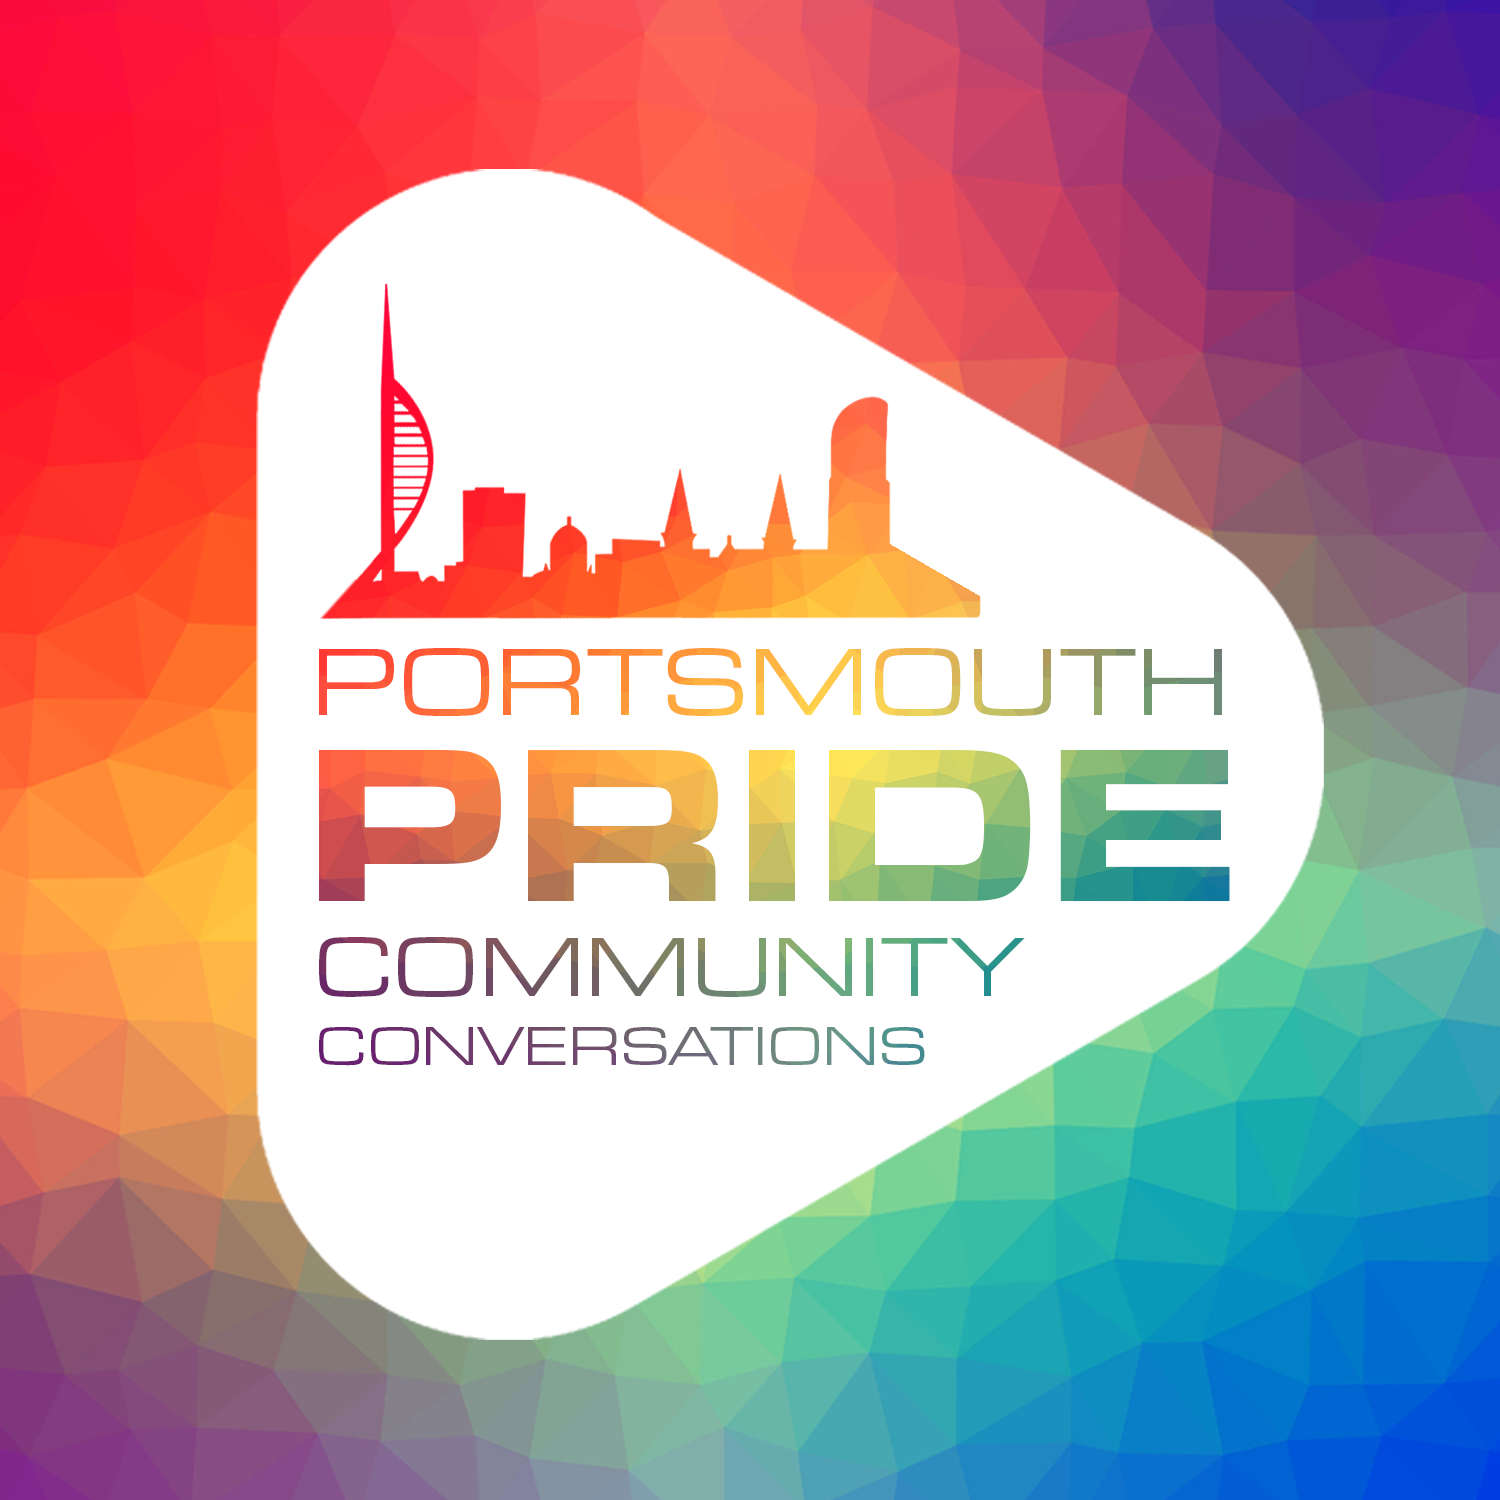 Portsmouth Pride Community Conversations